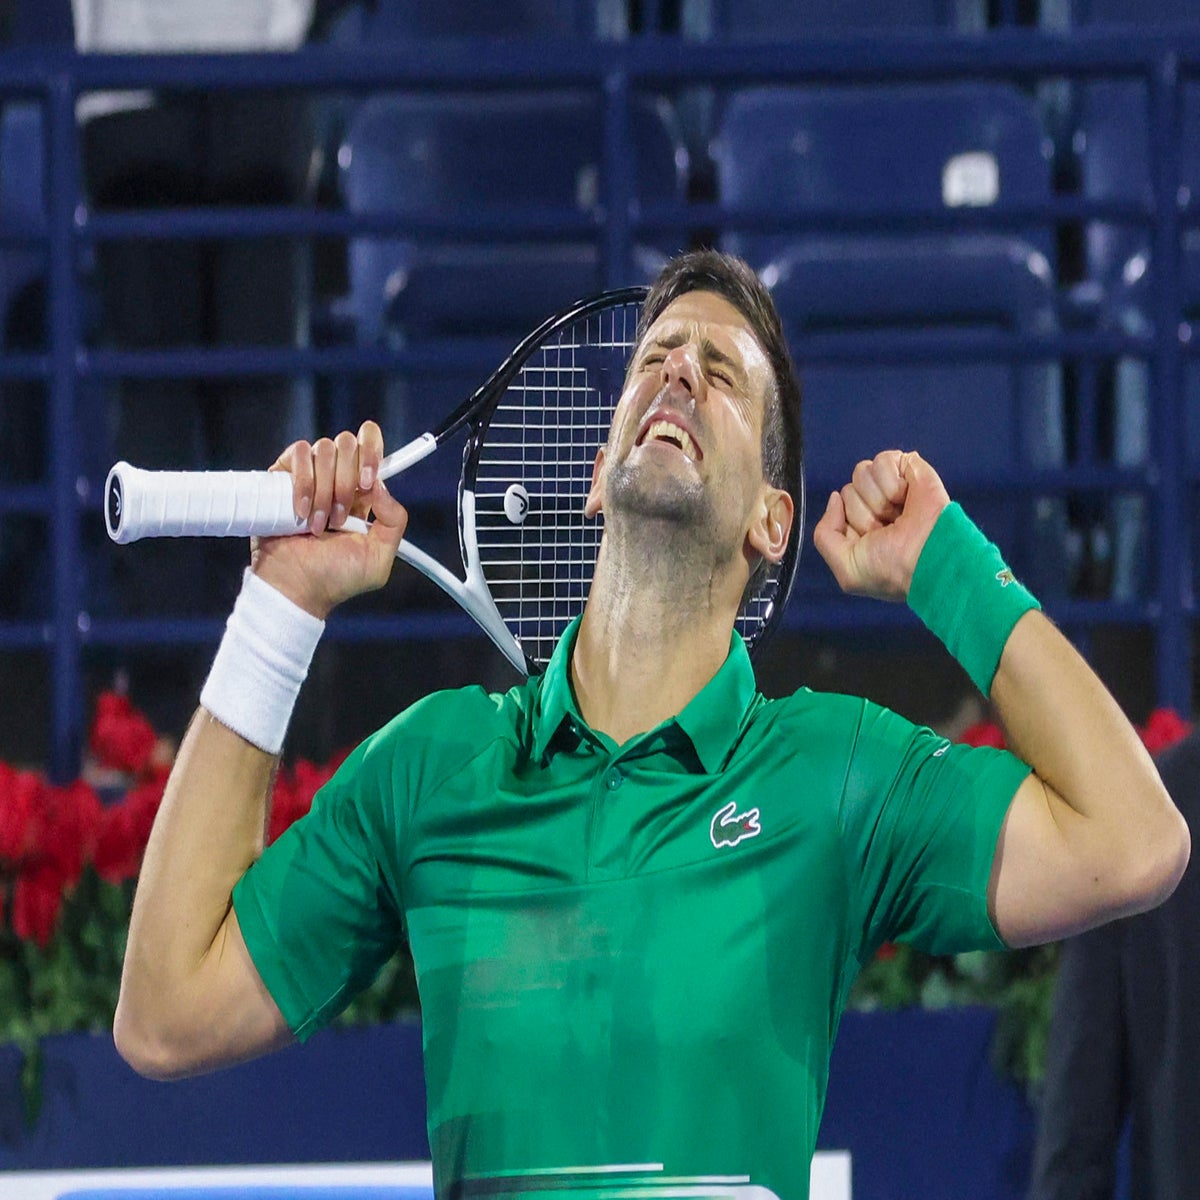 Murray & Djokovic in Dubai action: Latest scores, Tennis News